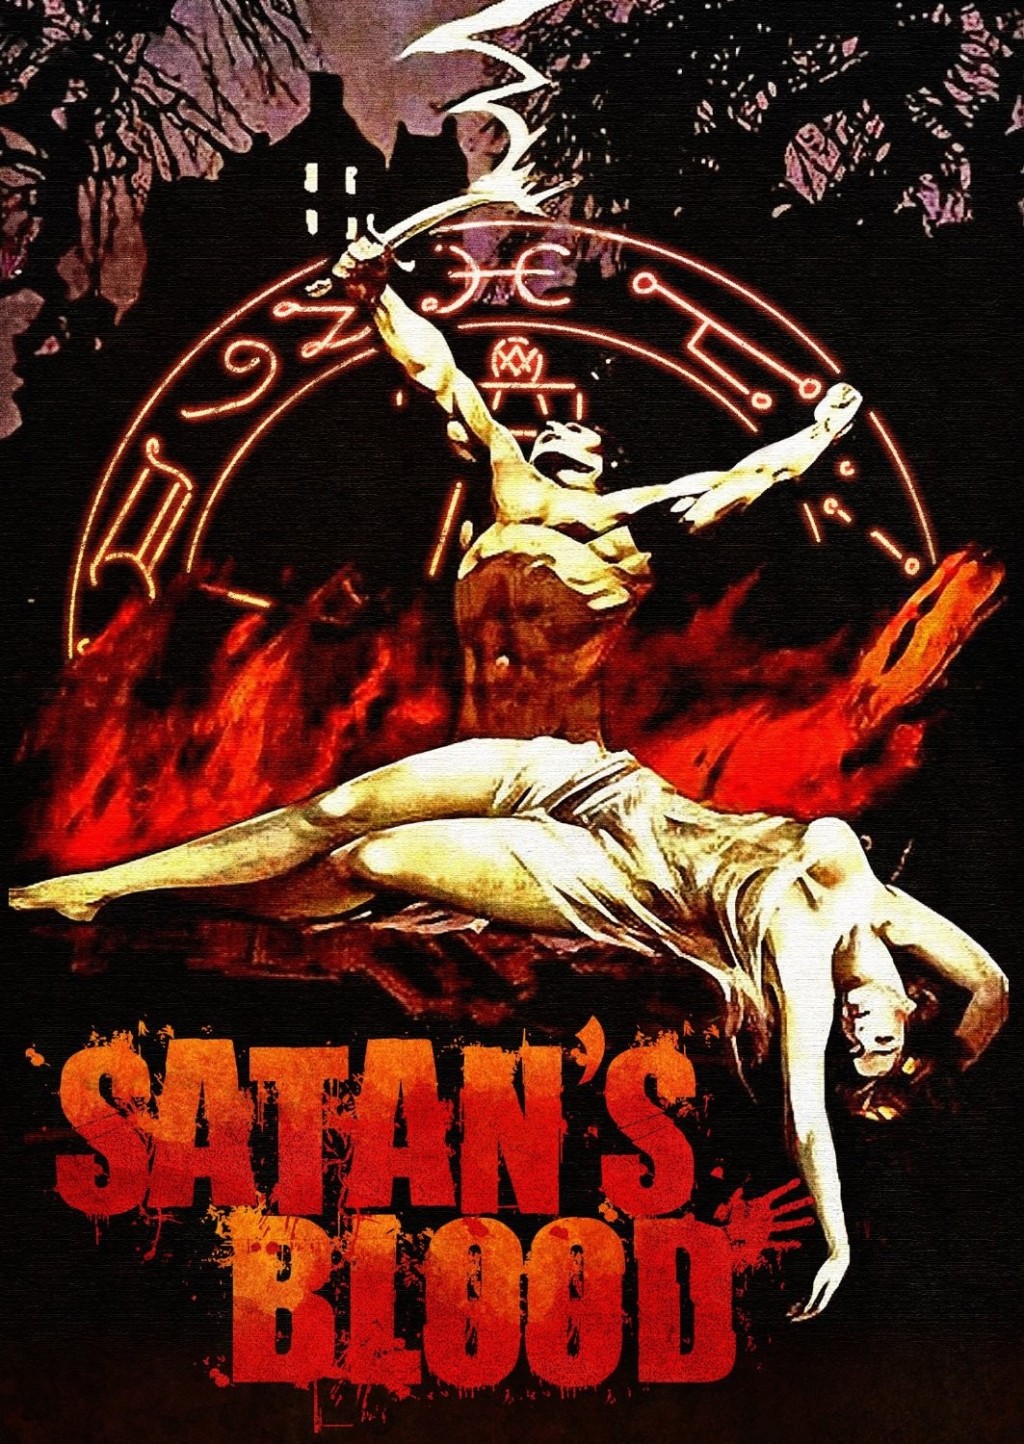 Satan’s Blood